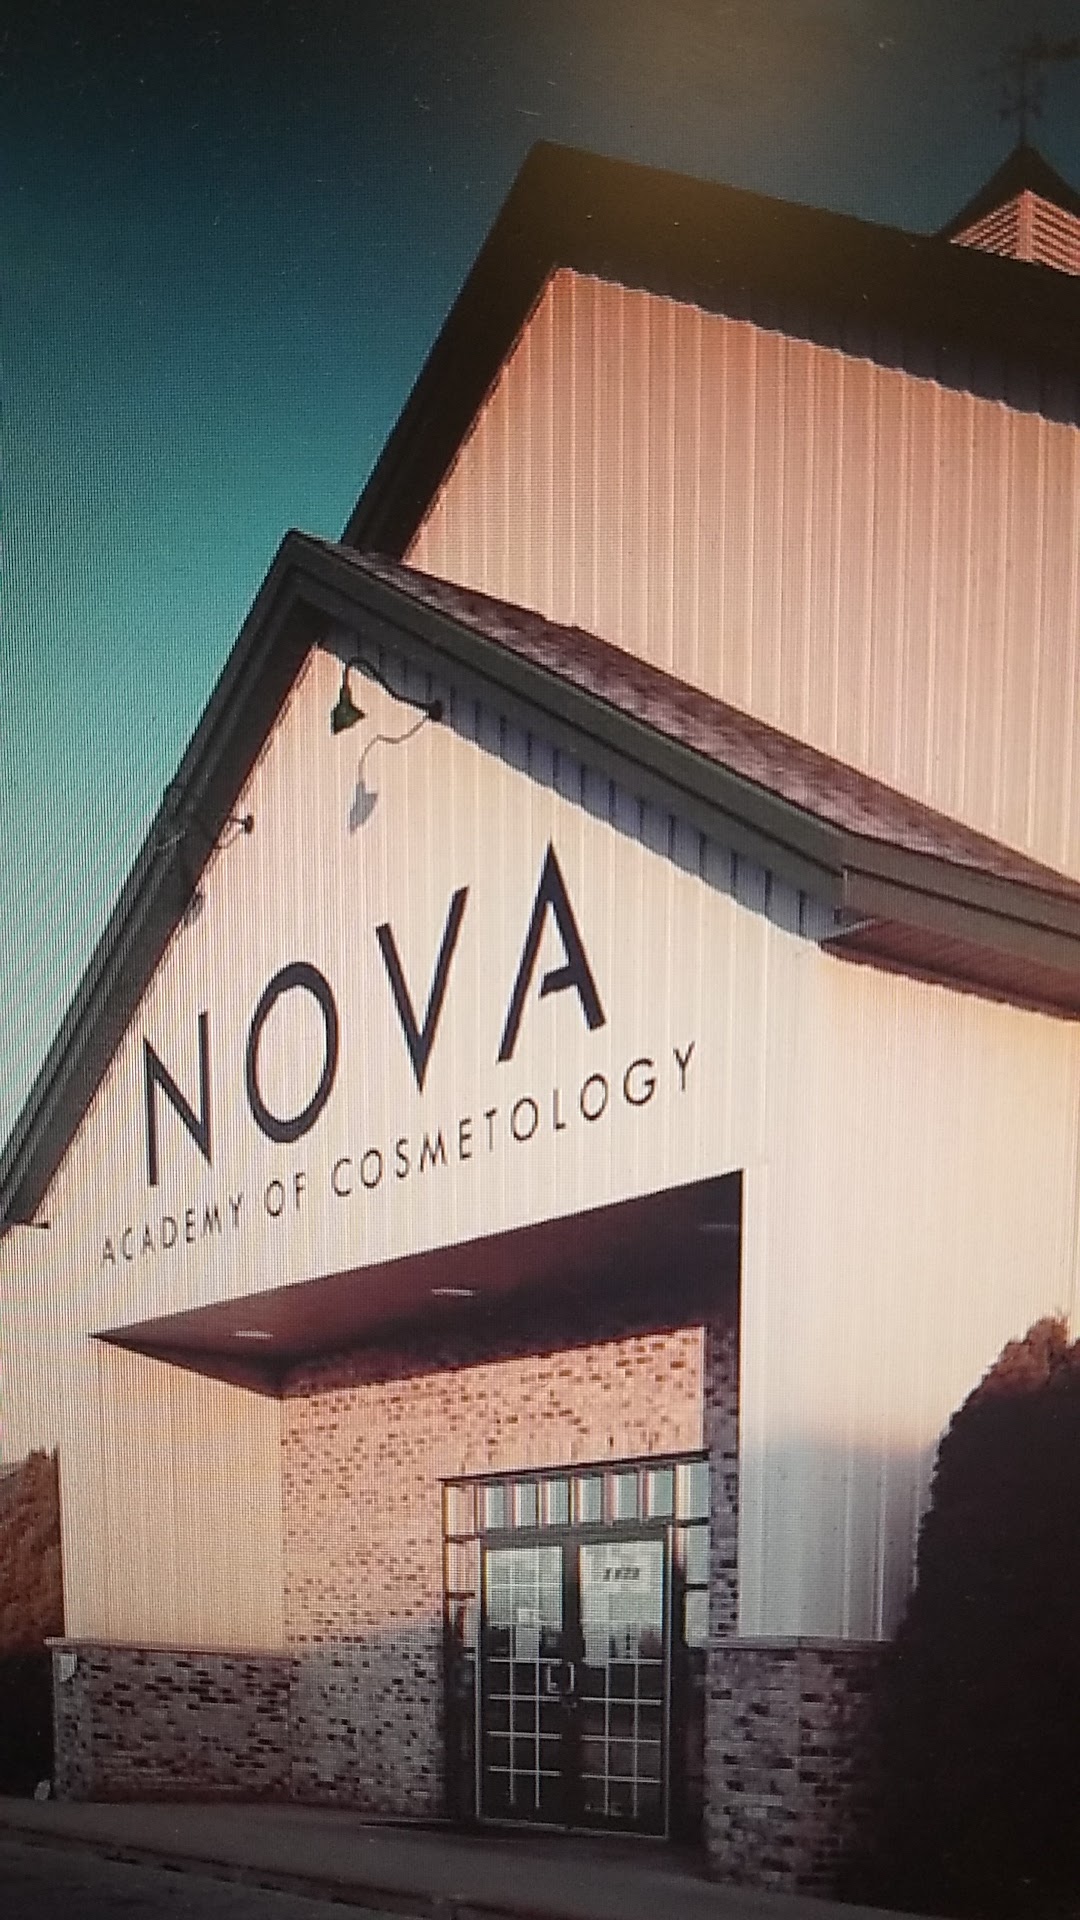 Nova Academy Of Cosmetology